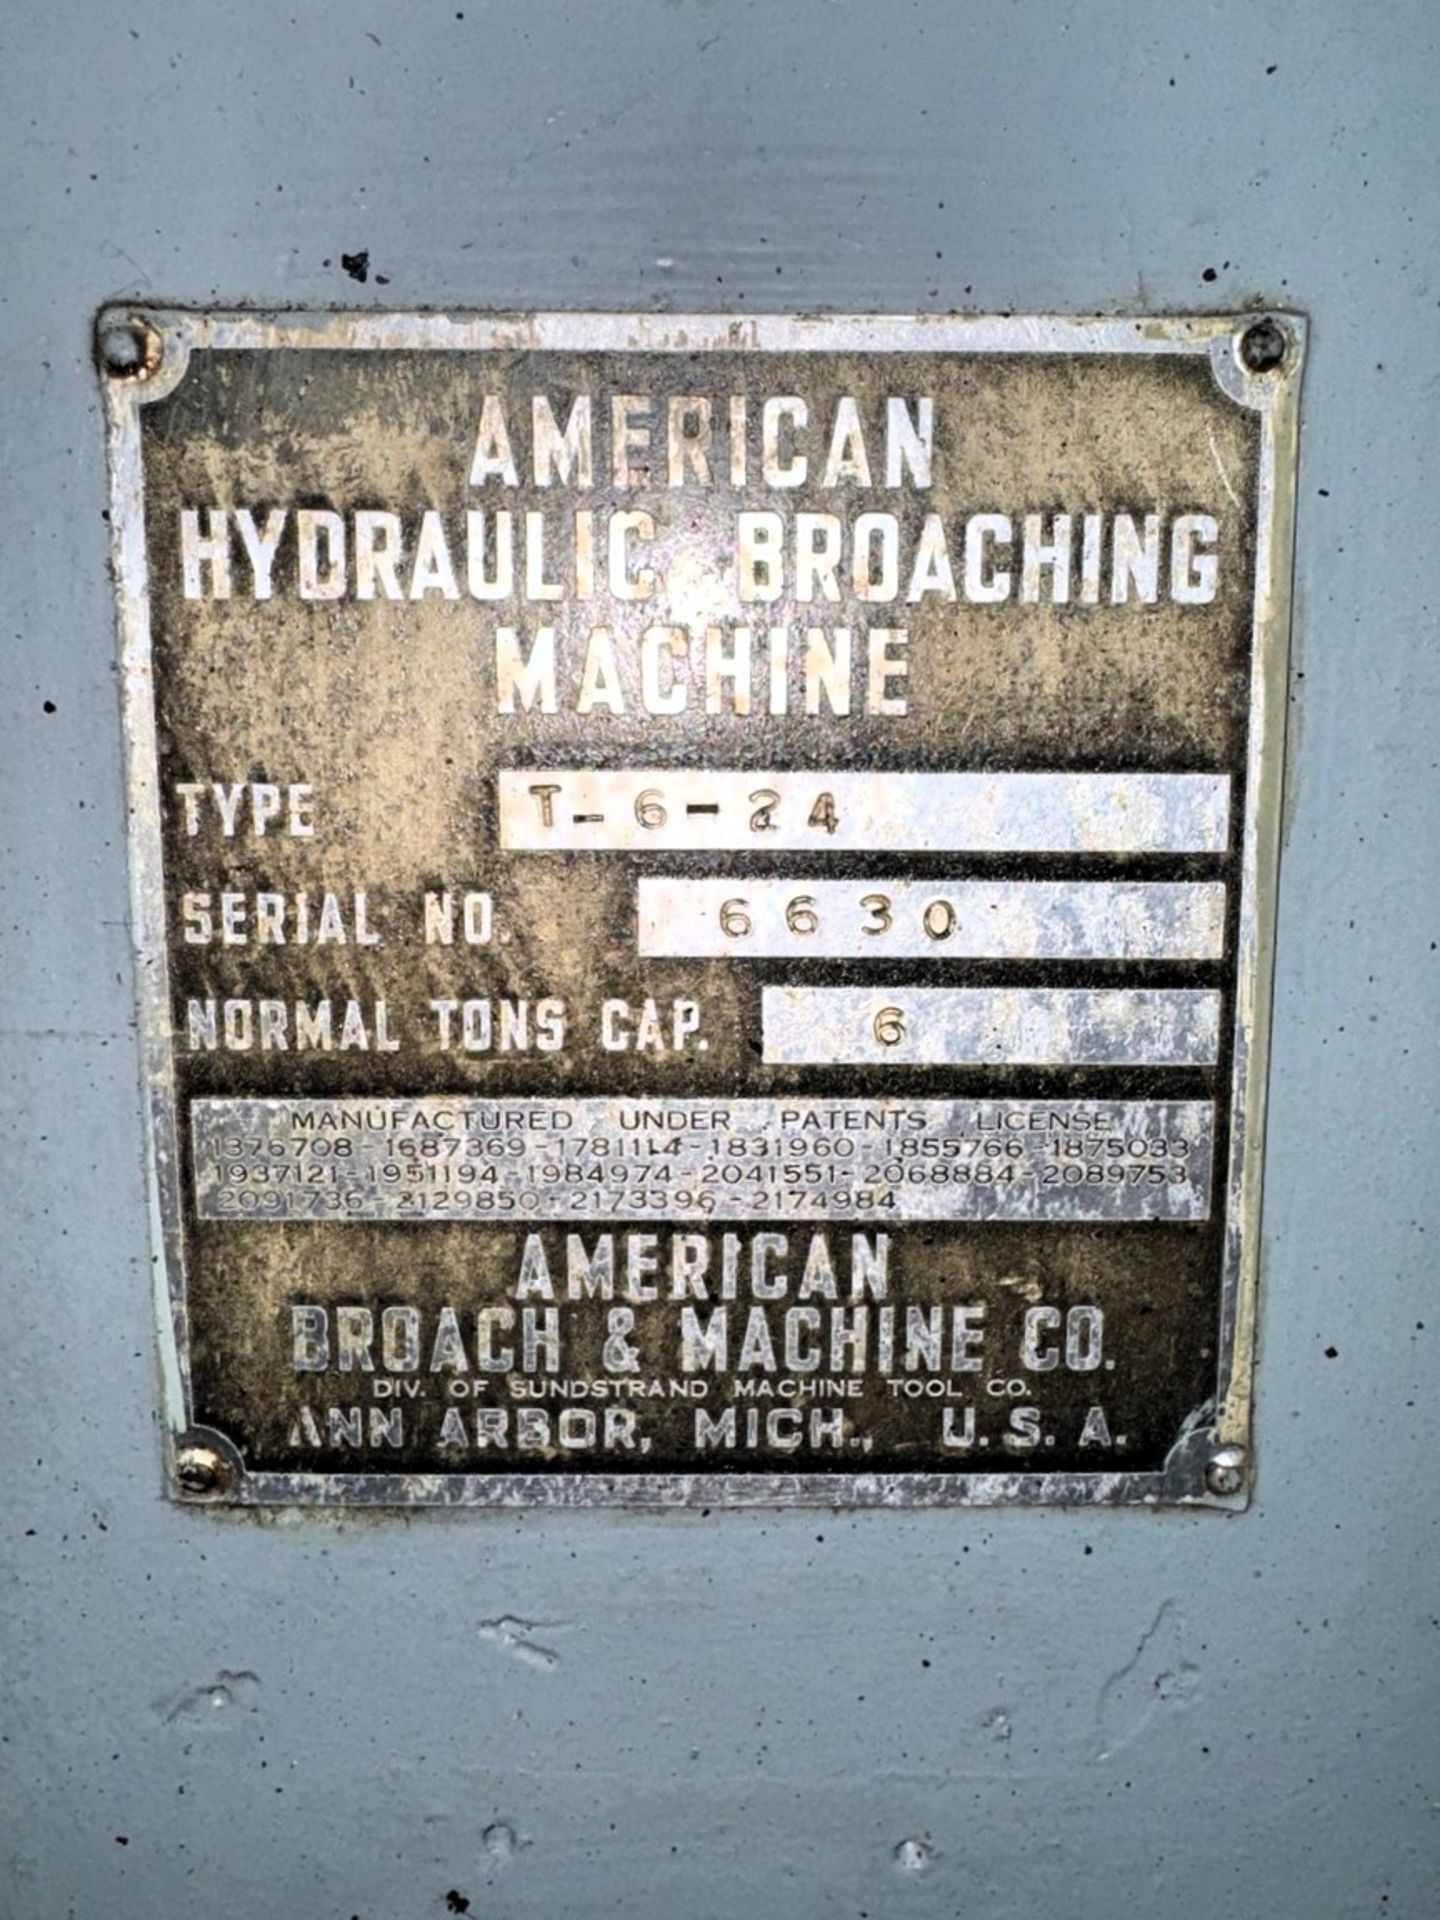 American Model T-6-24 Vertical Hydraulic Broach - Image 6 of 6